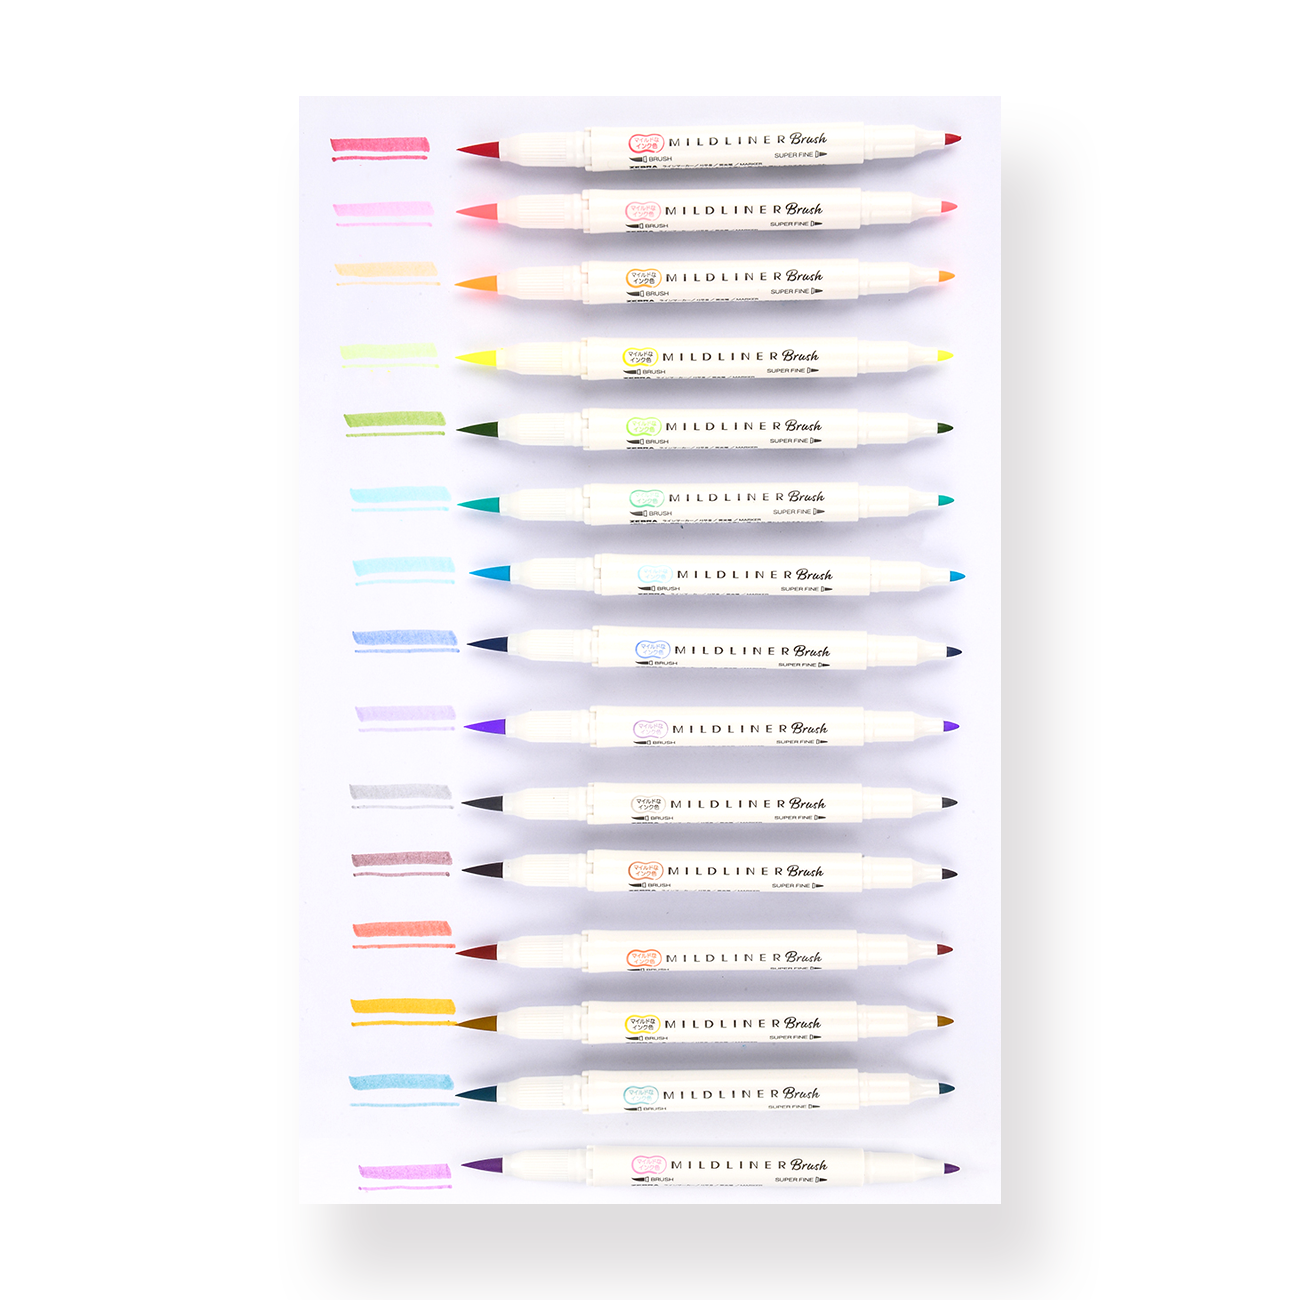 Zebra Mildliner Double-Ended Brush Pen 15 Set of Assorted Colors